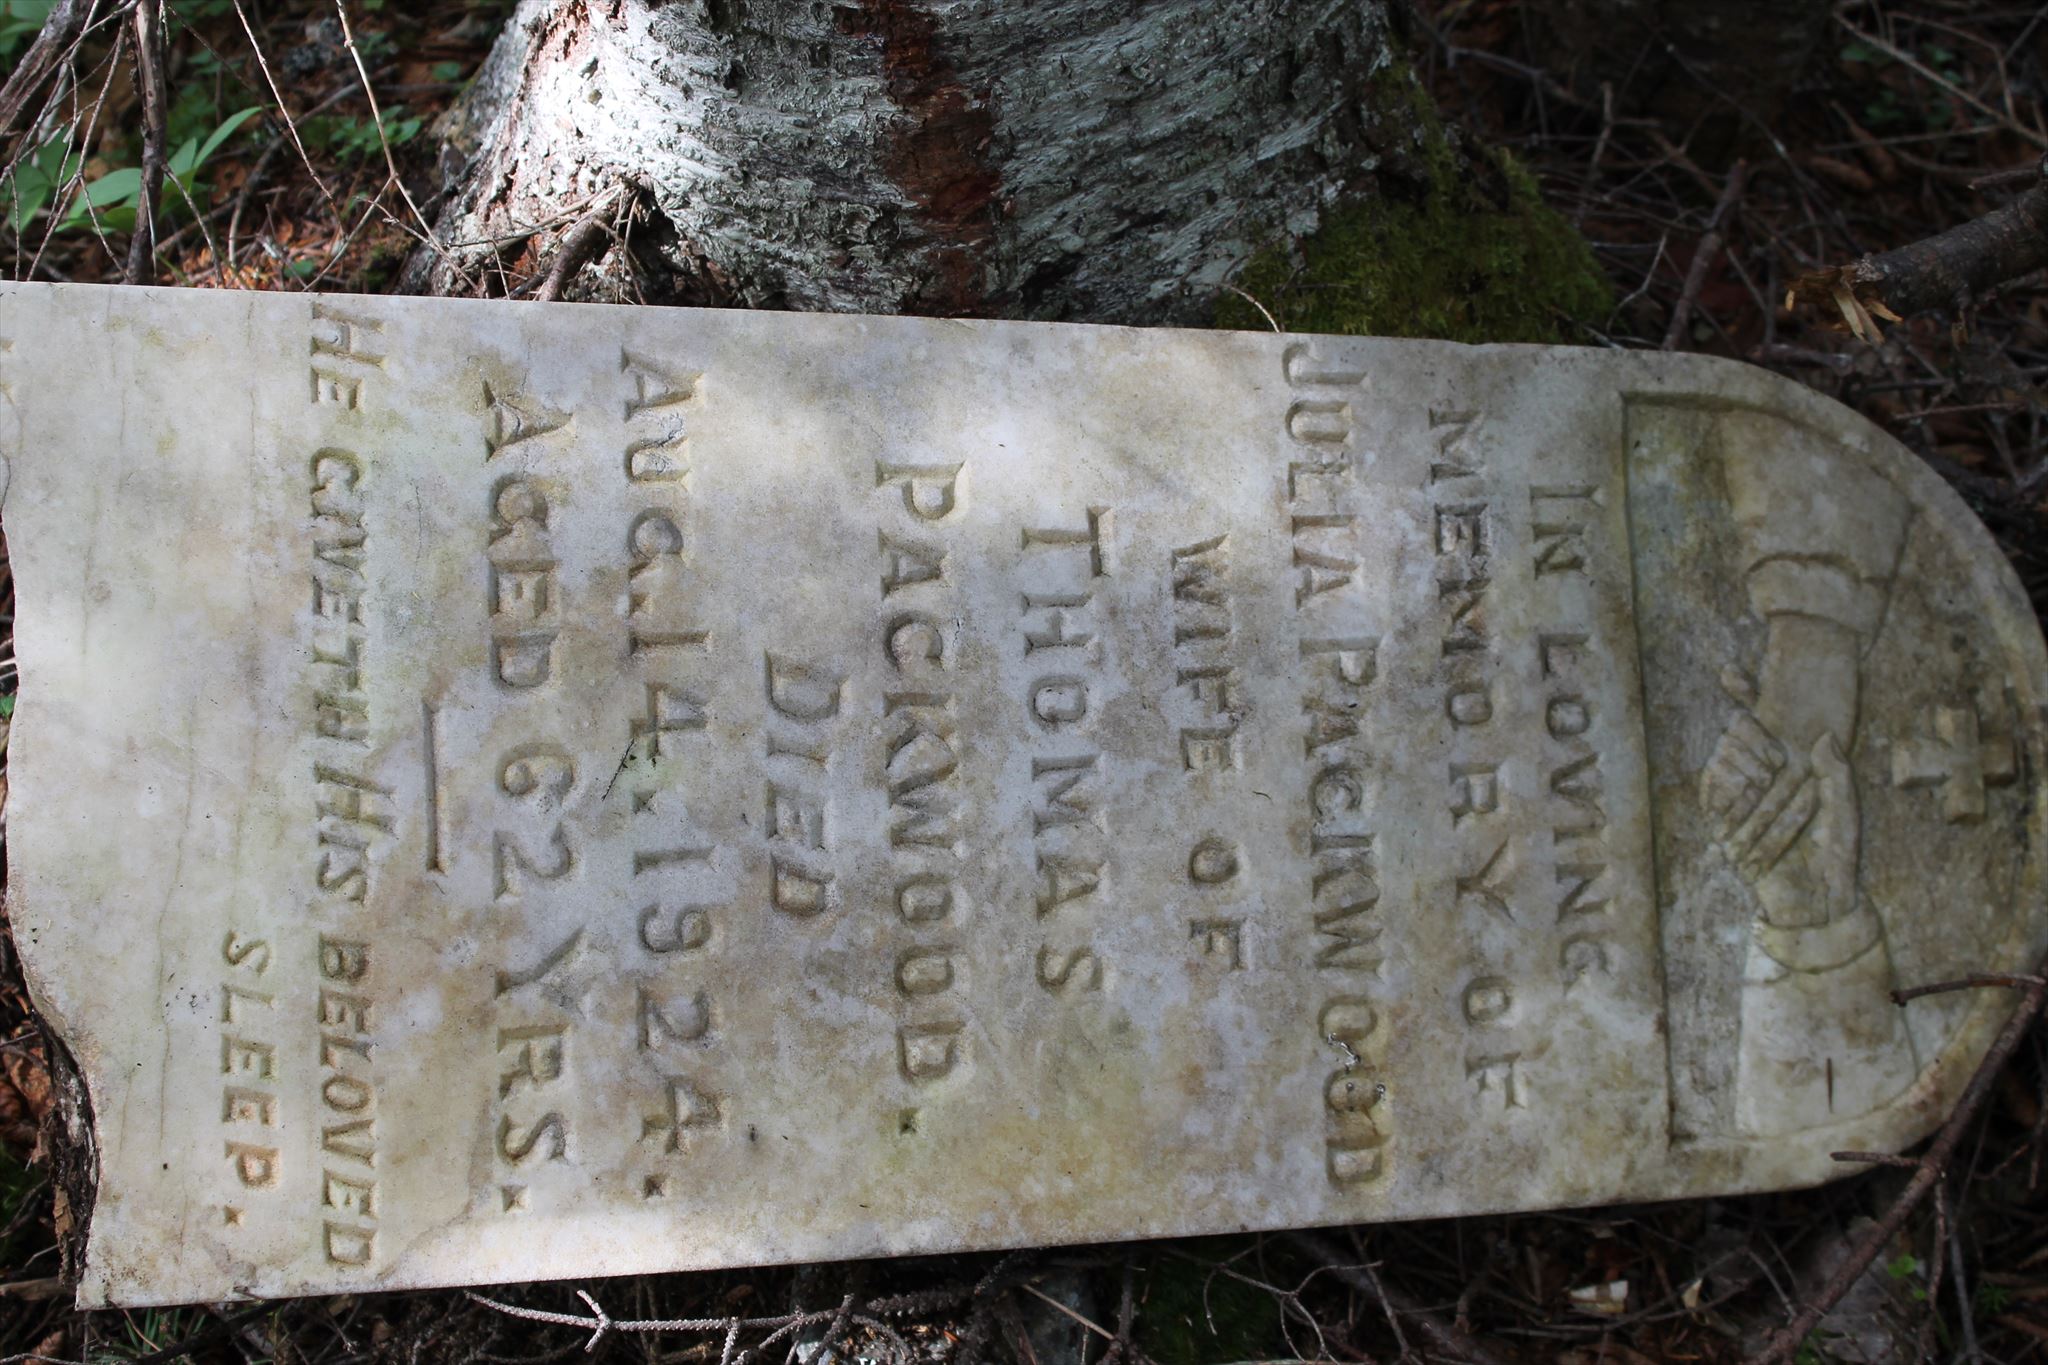 An example of a fallen headstone